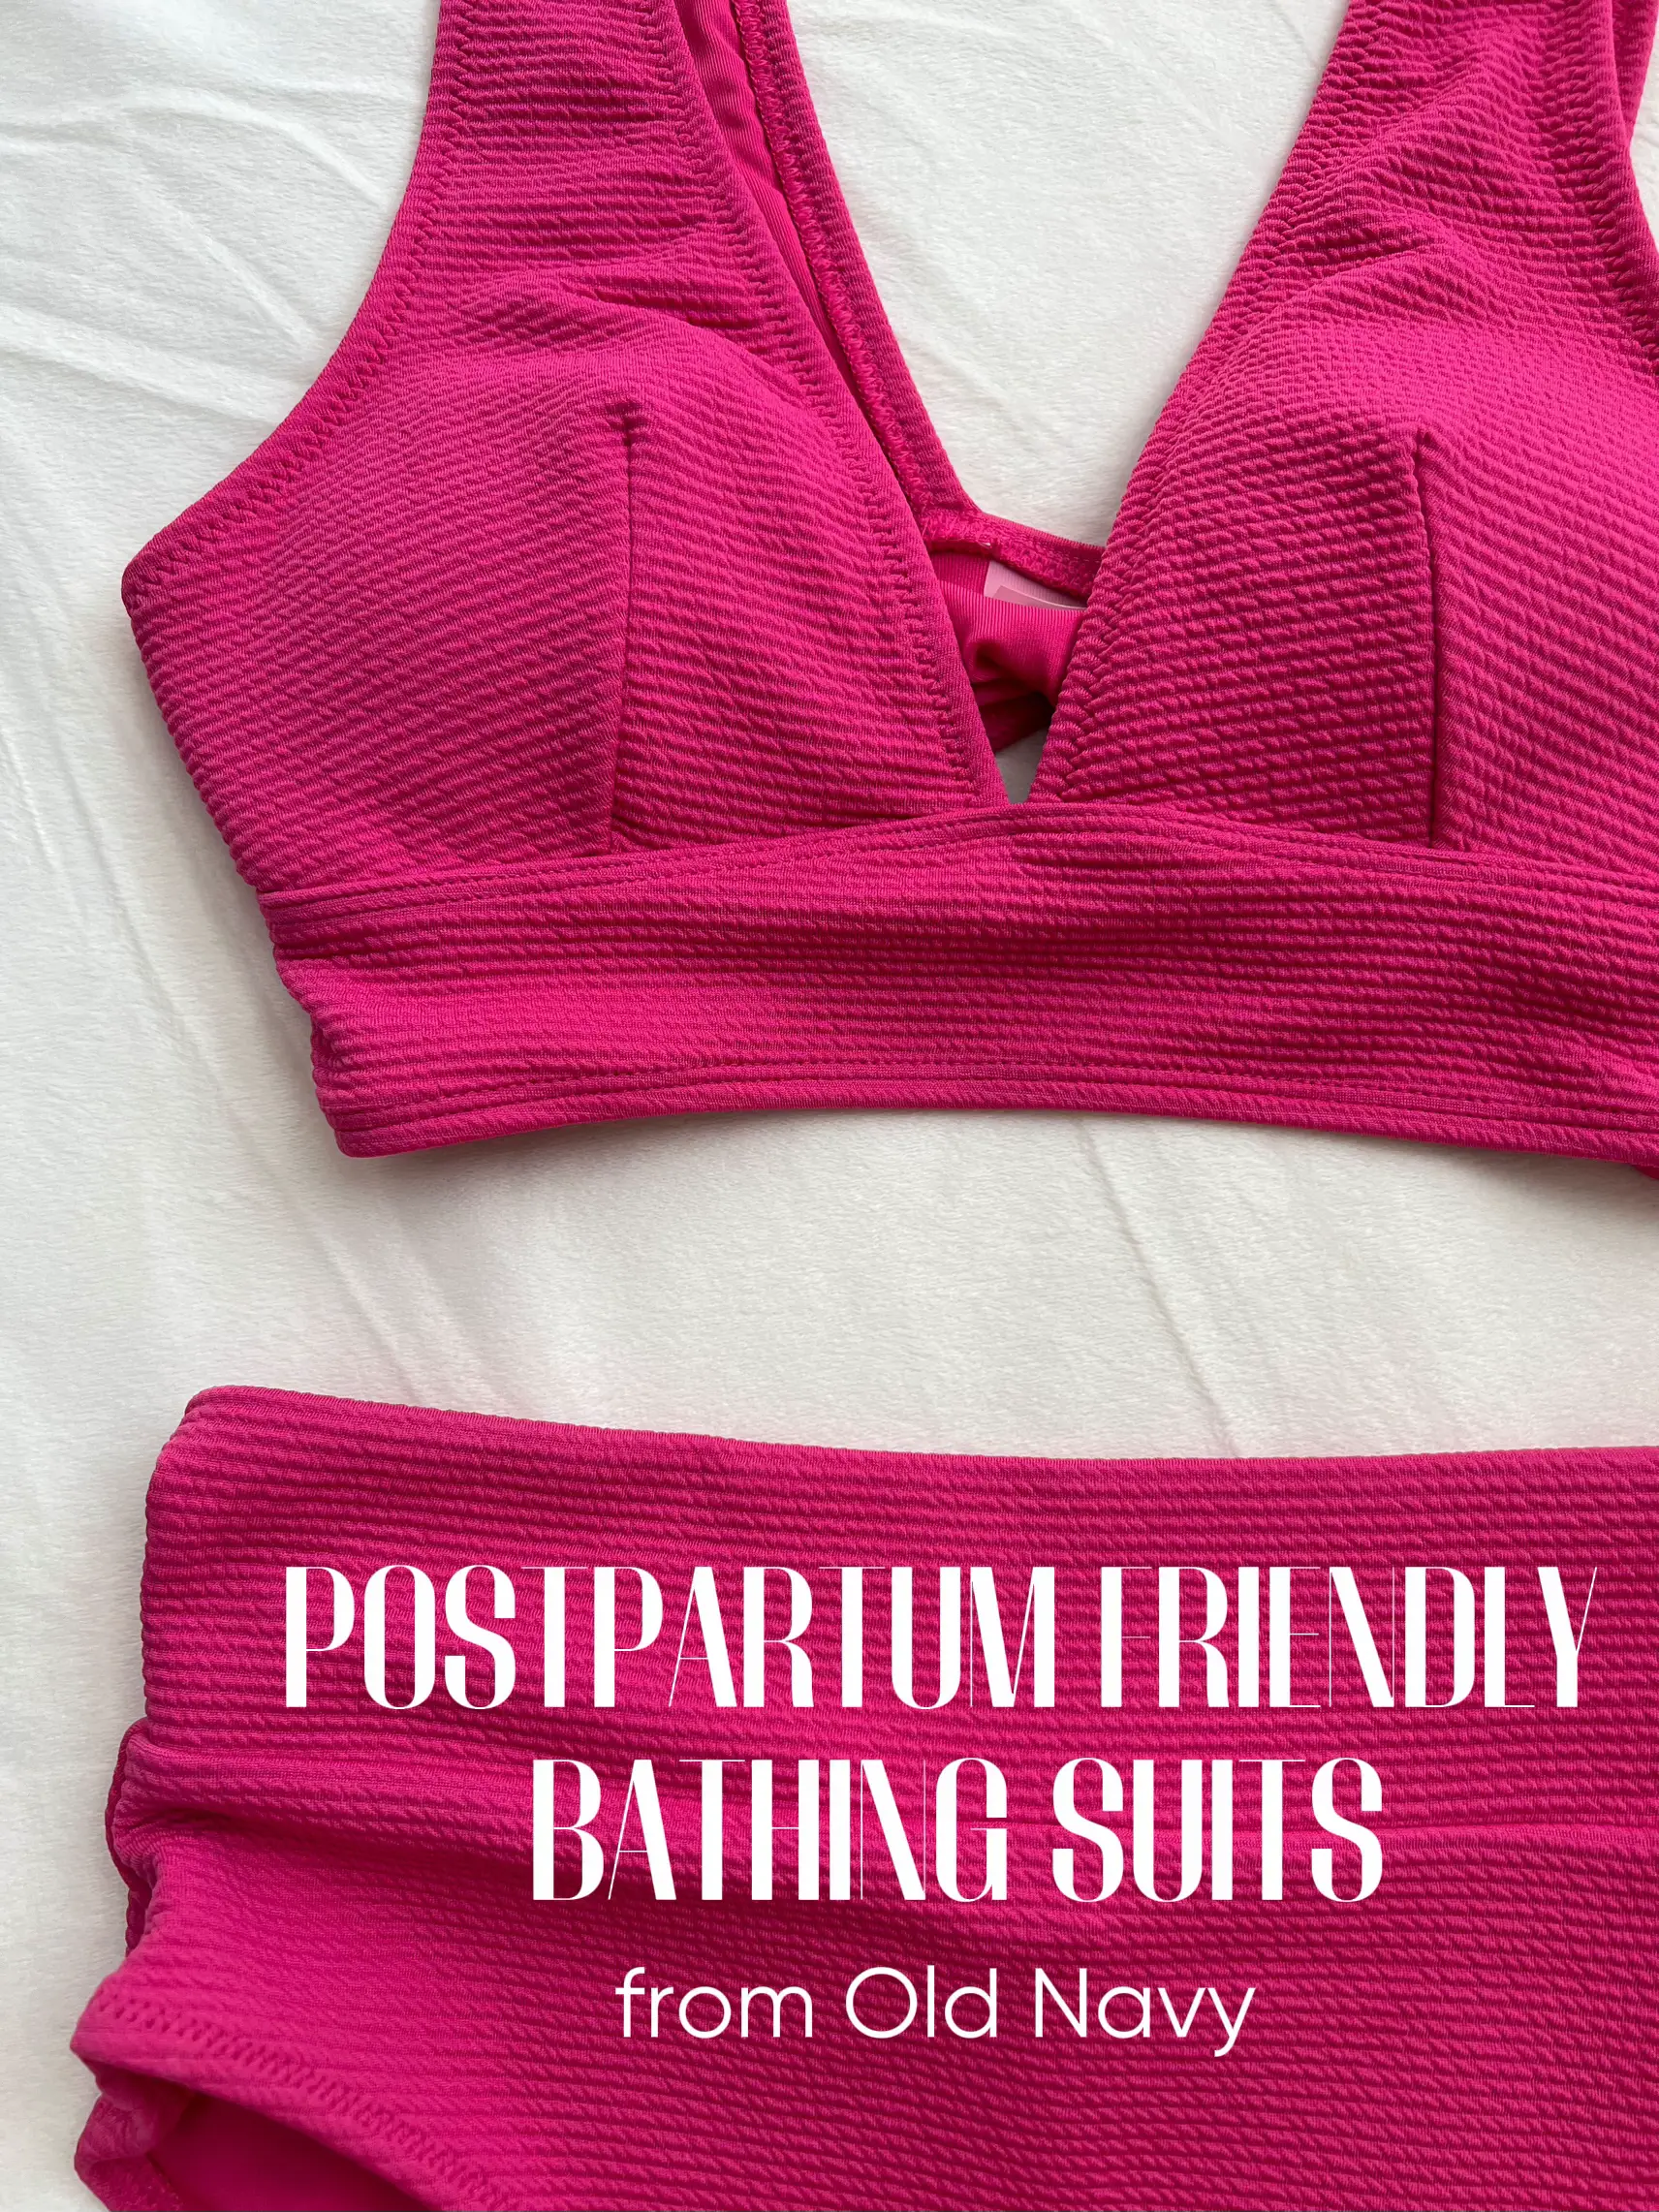 Cute Pink Wealthy Bamboo Leaf Sports Bra Swim Top Bikini Sets - Pink / S